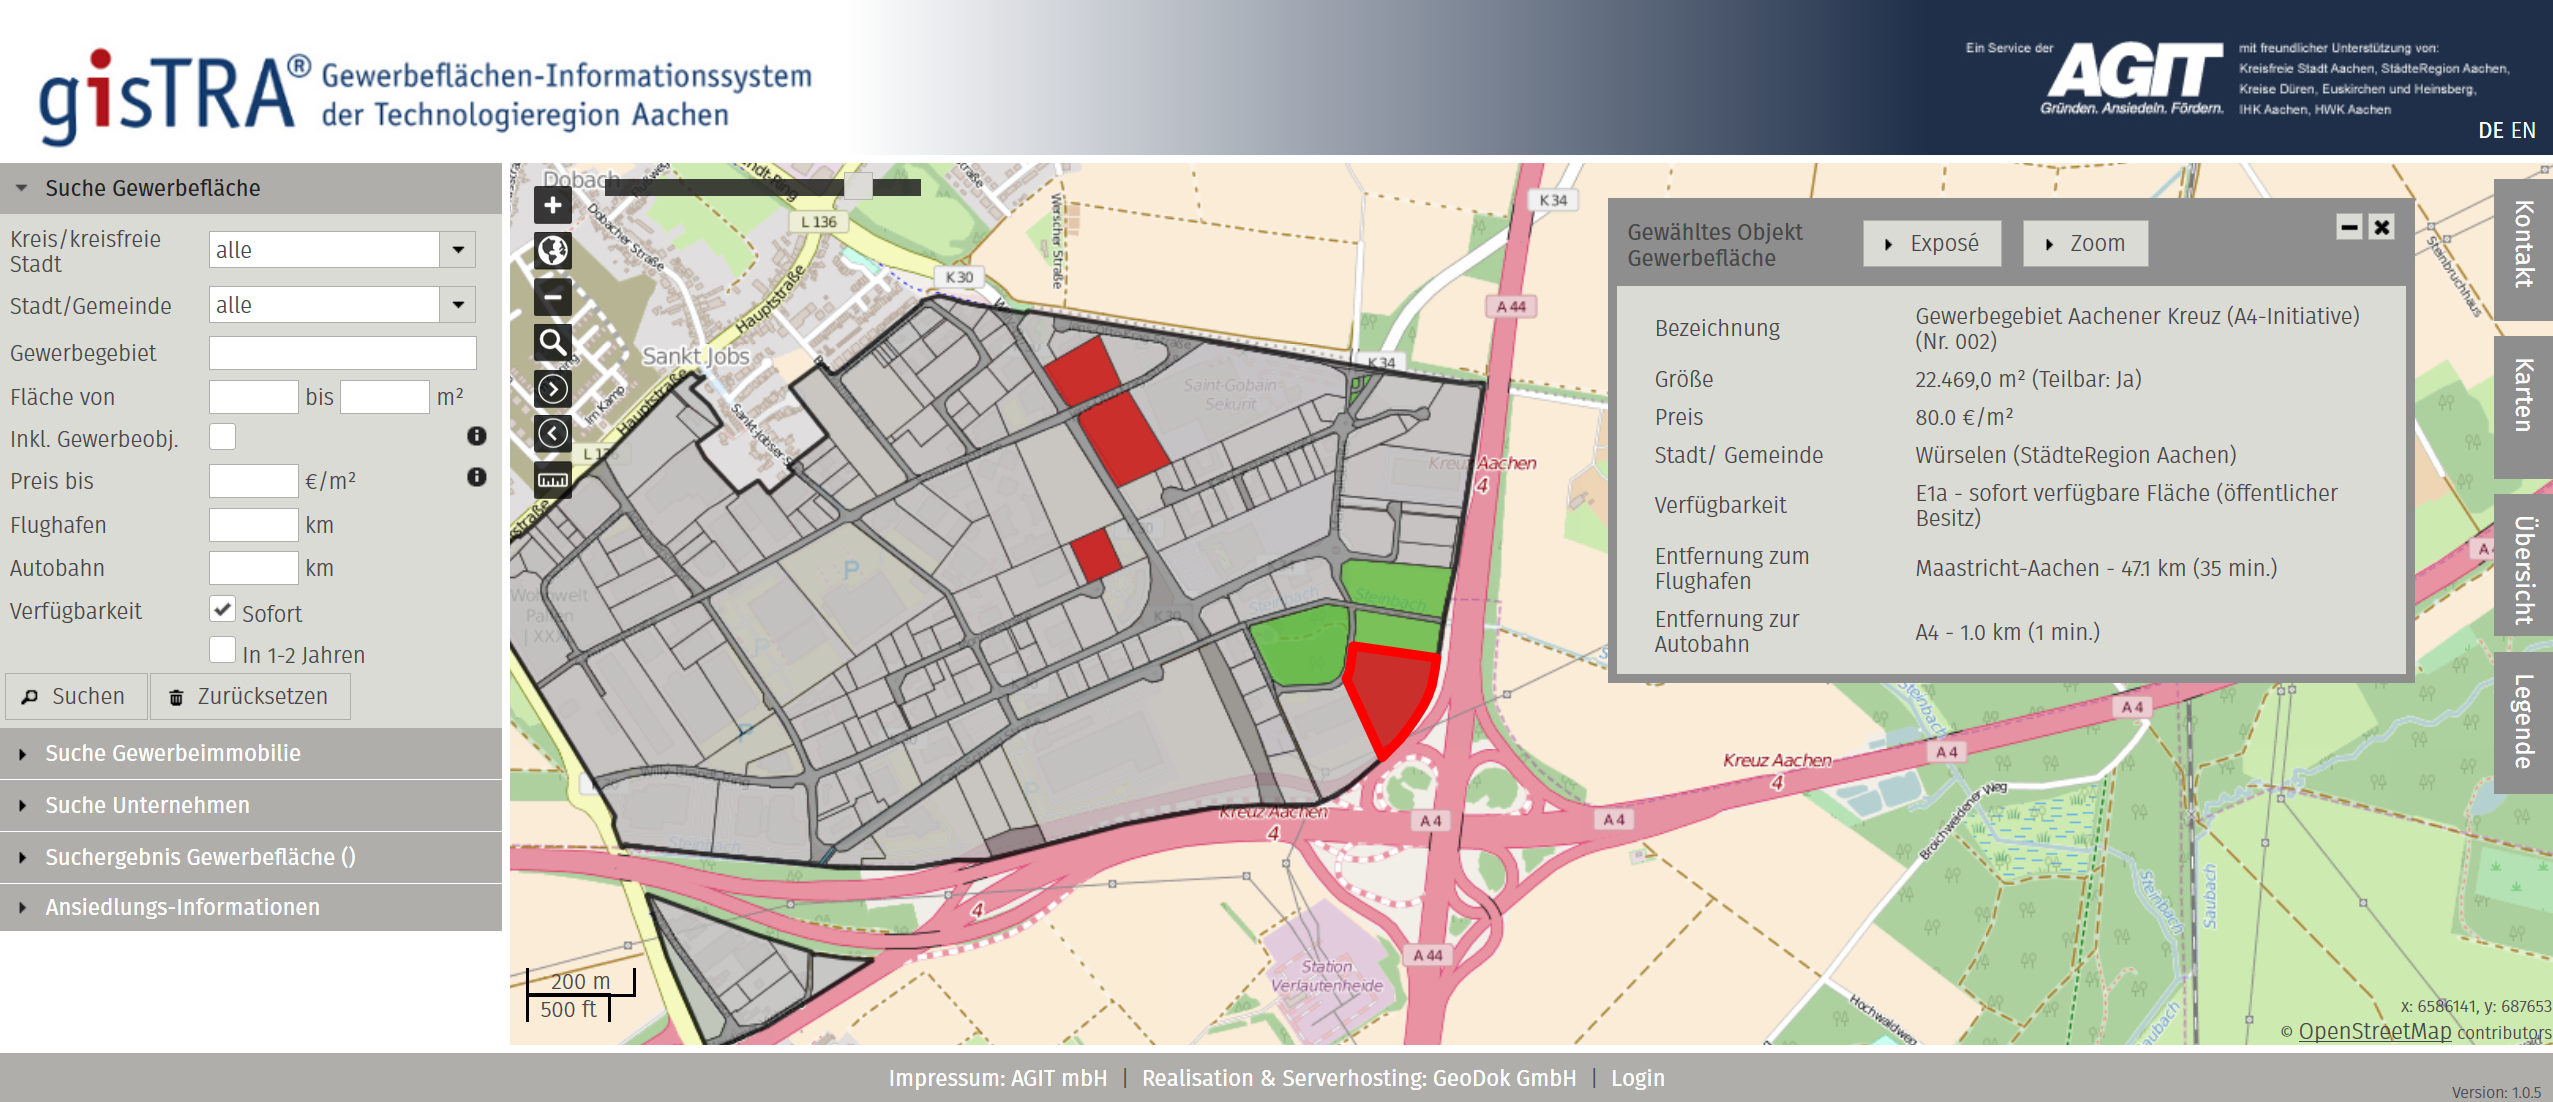 gisTRA – Gewerbeflächen-Informationsportal der Technologieregion Aachen.